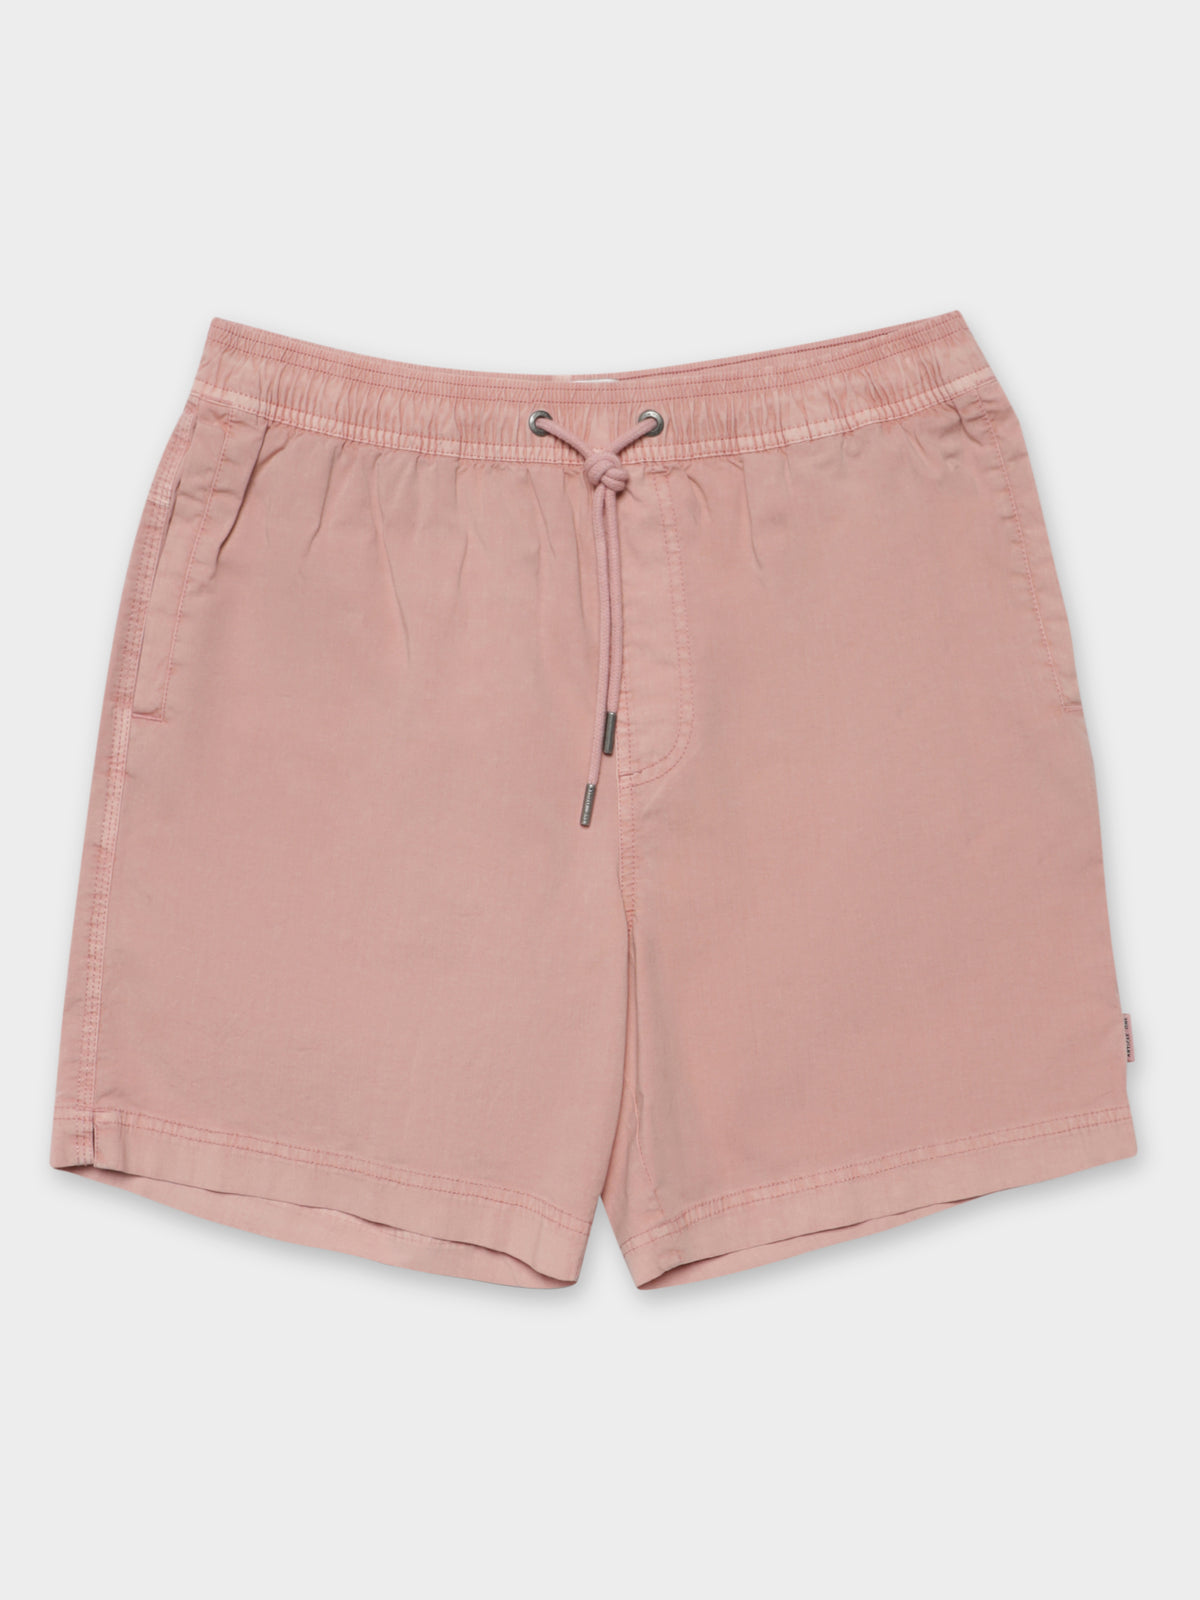 Saratoga Swim Shorts in Candy Pink